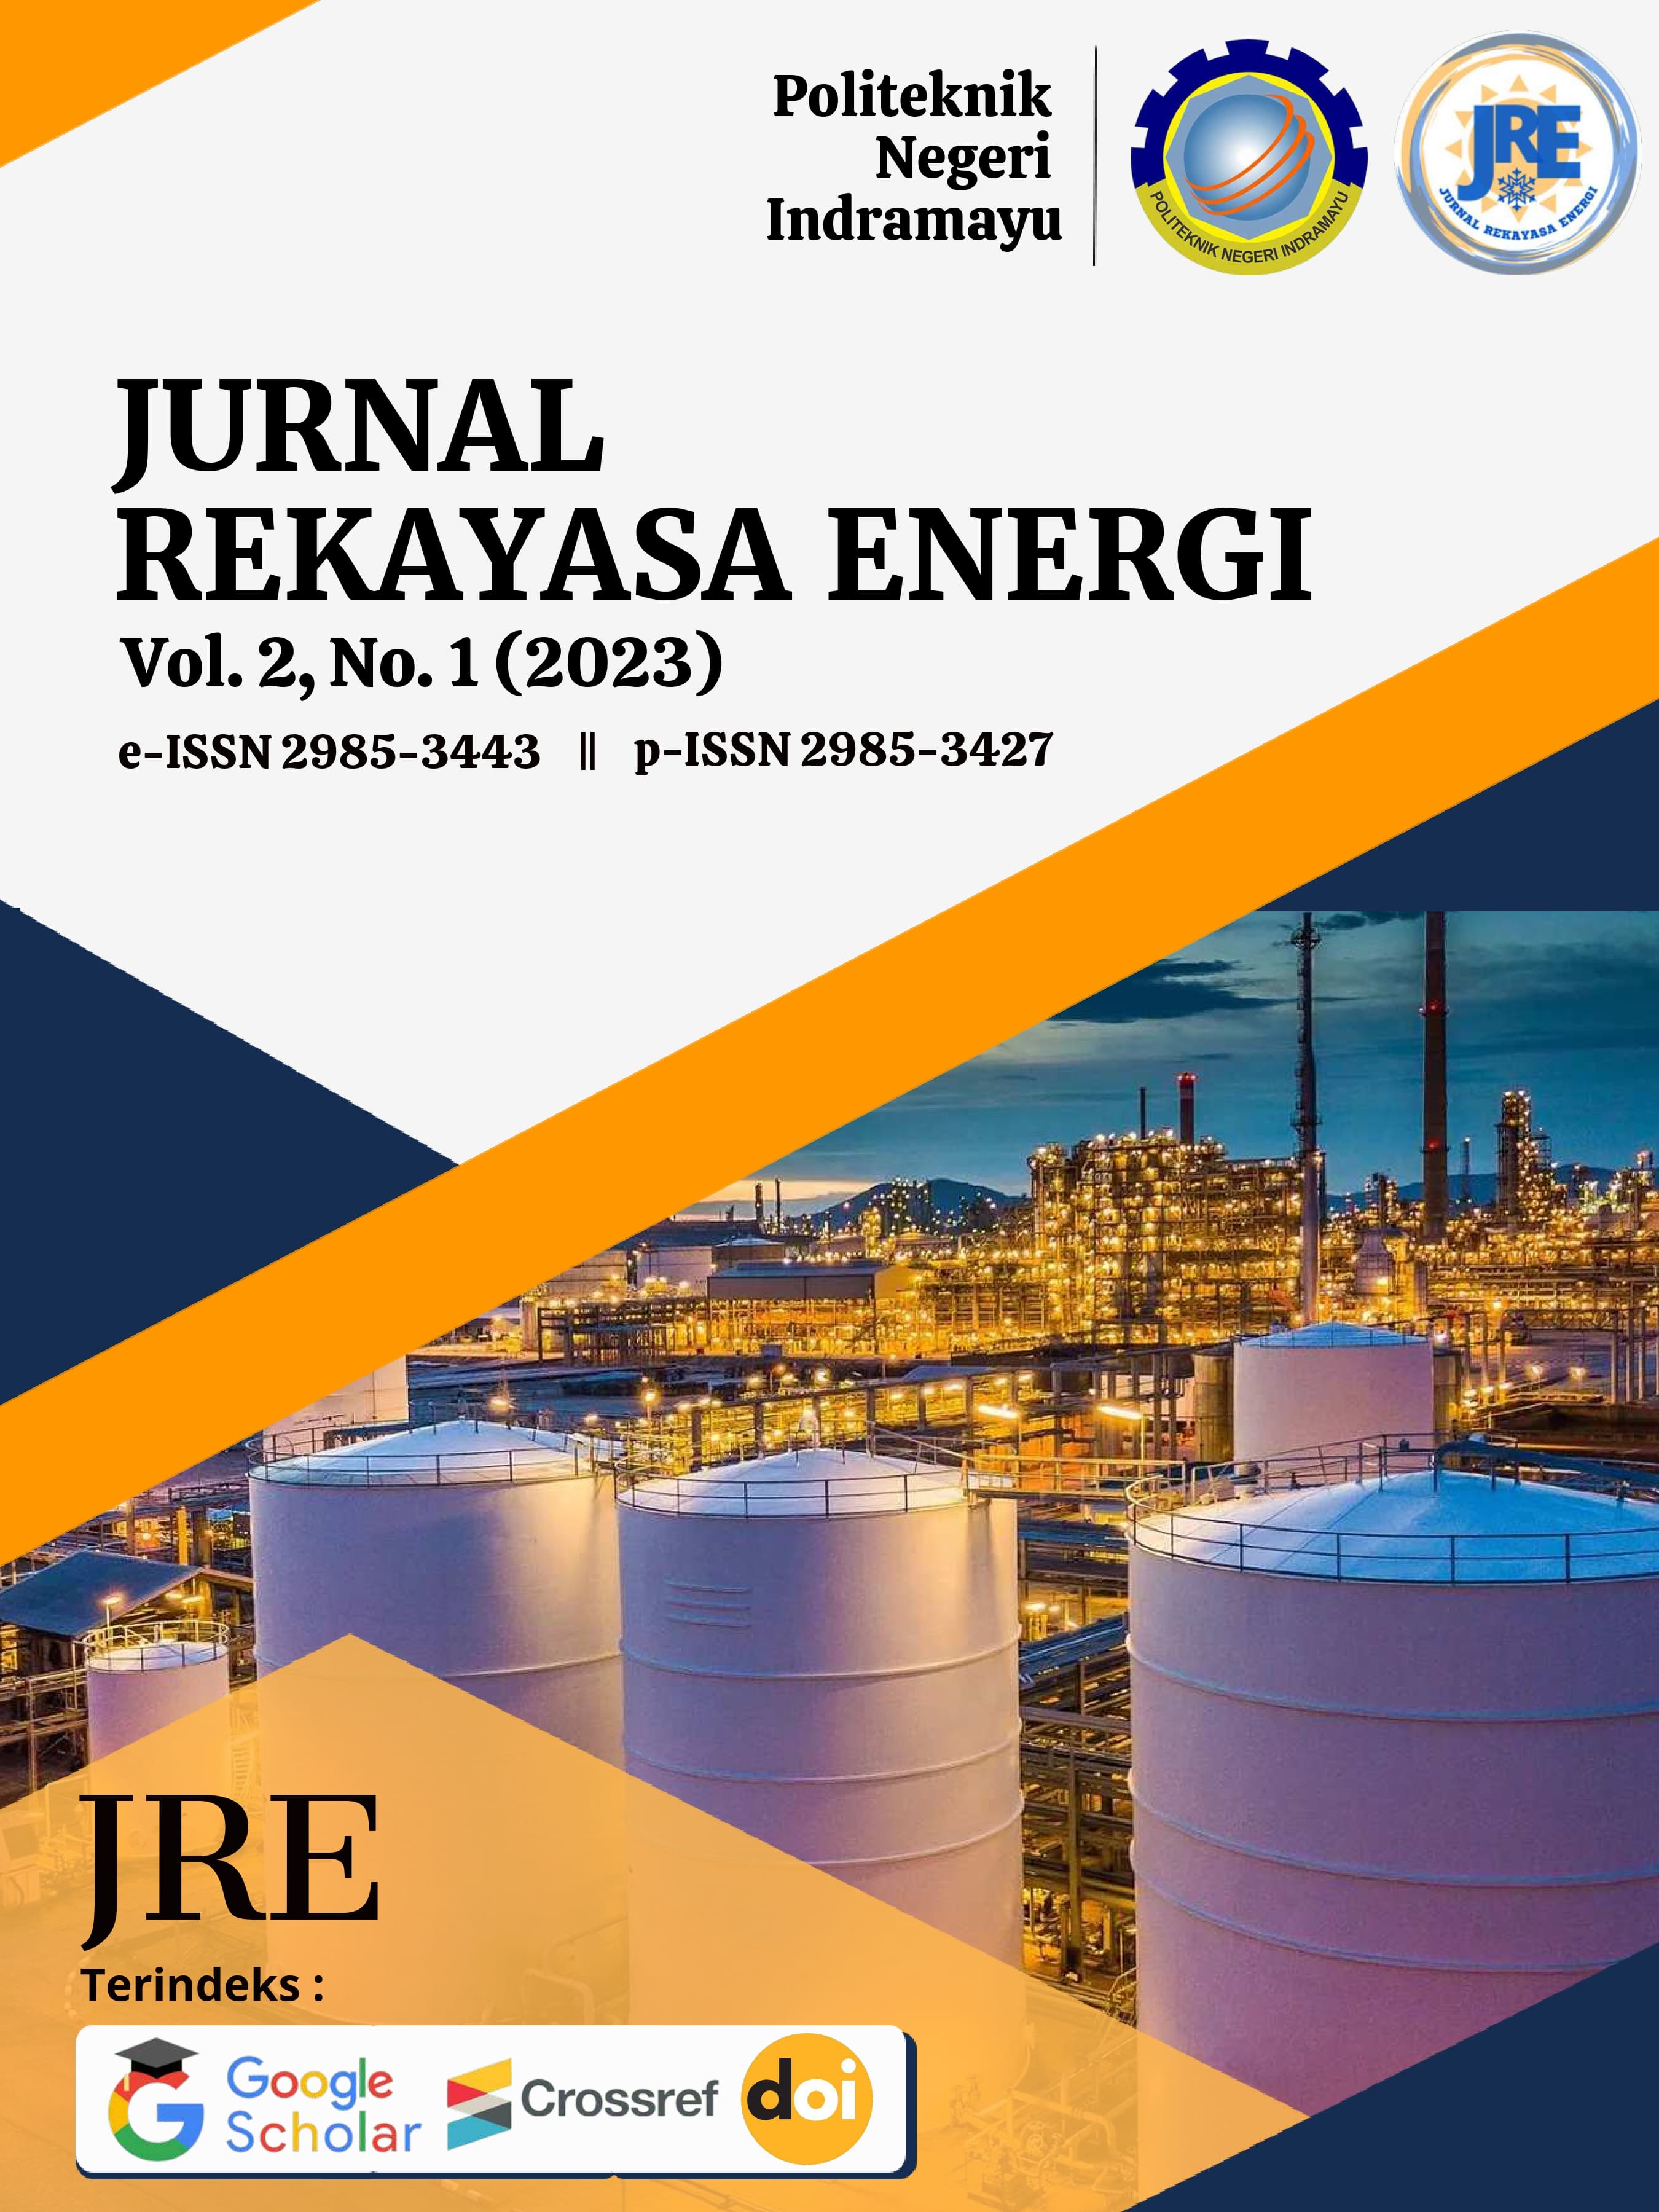 					Lihat Vol 2 No 1 (2023): Jurnal Rekayasa Energi
				